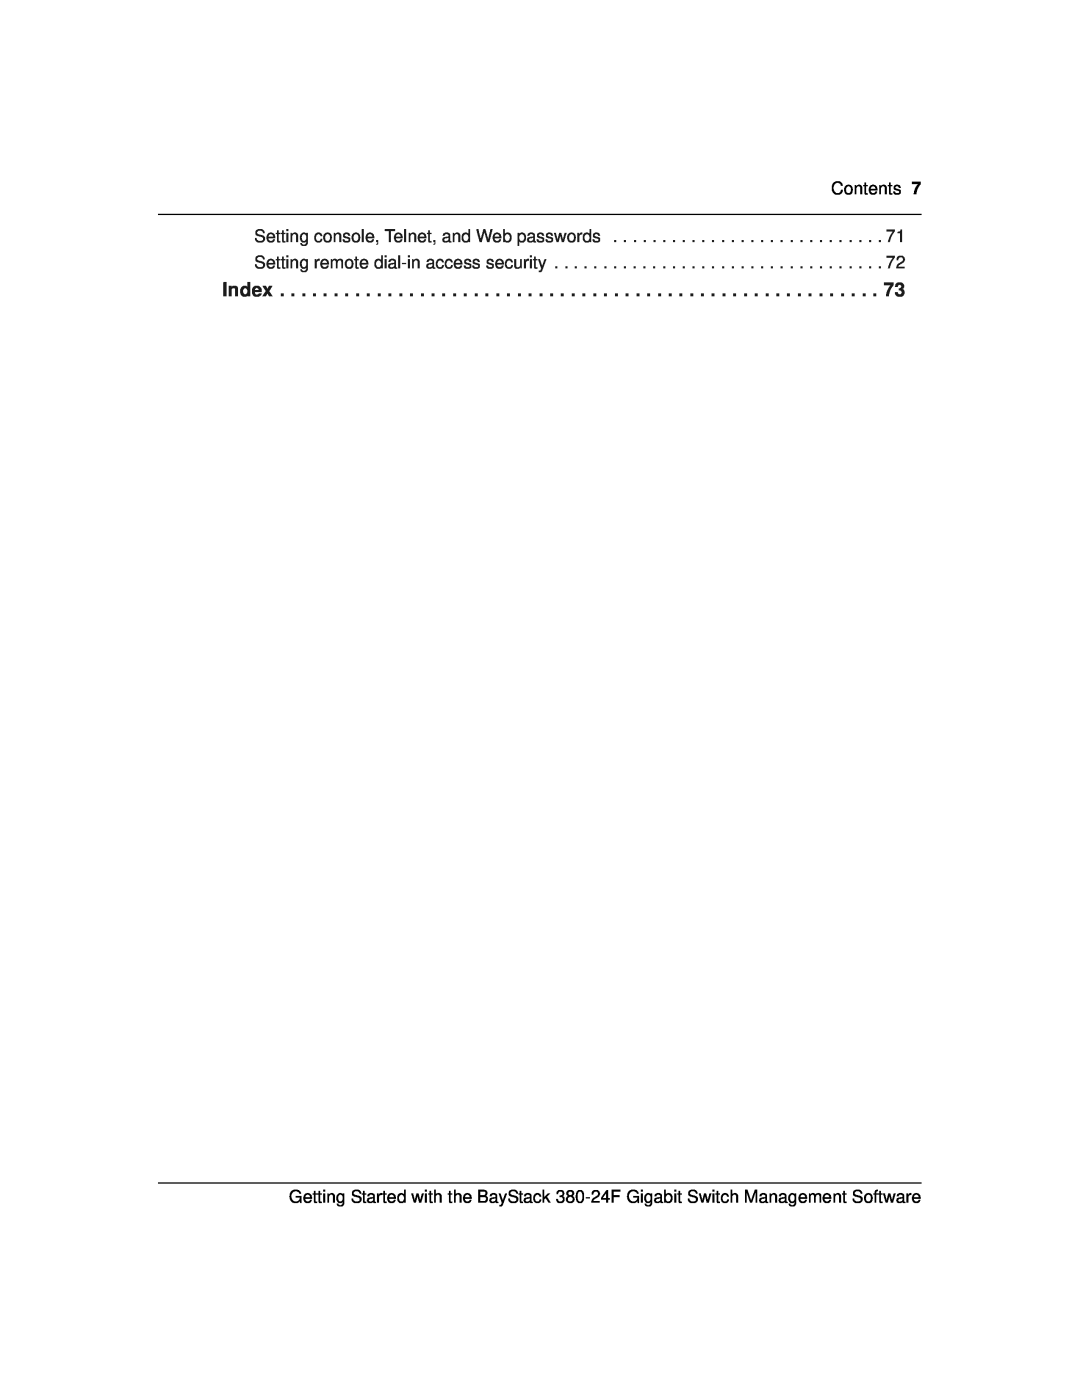 Nortel Networks 380-24F manual Index, Contents 